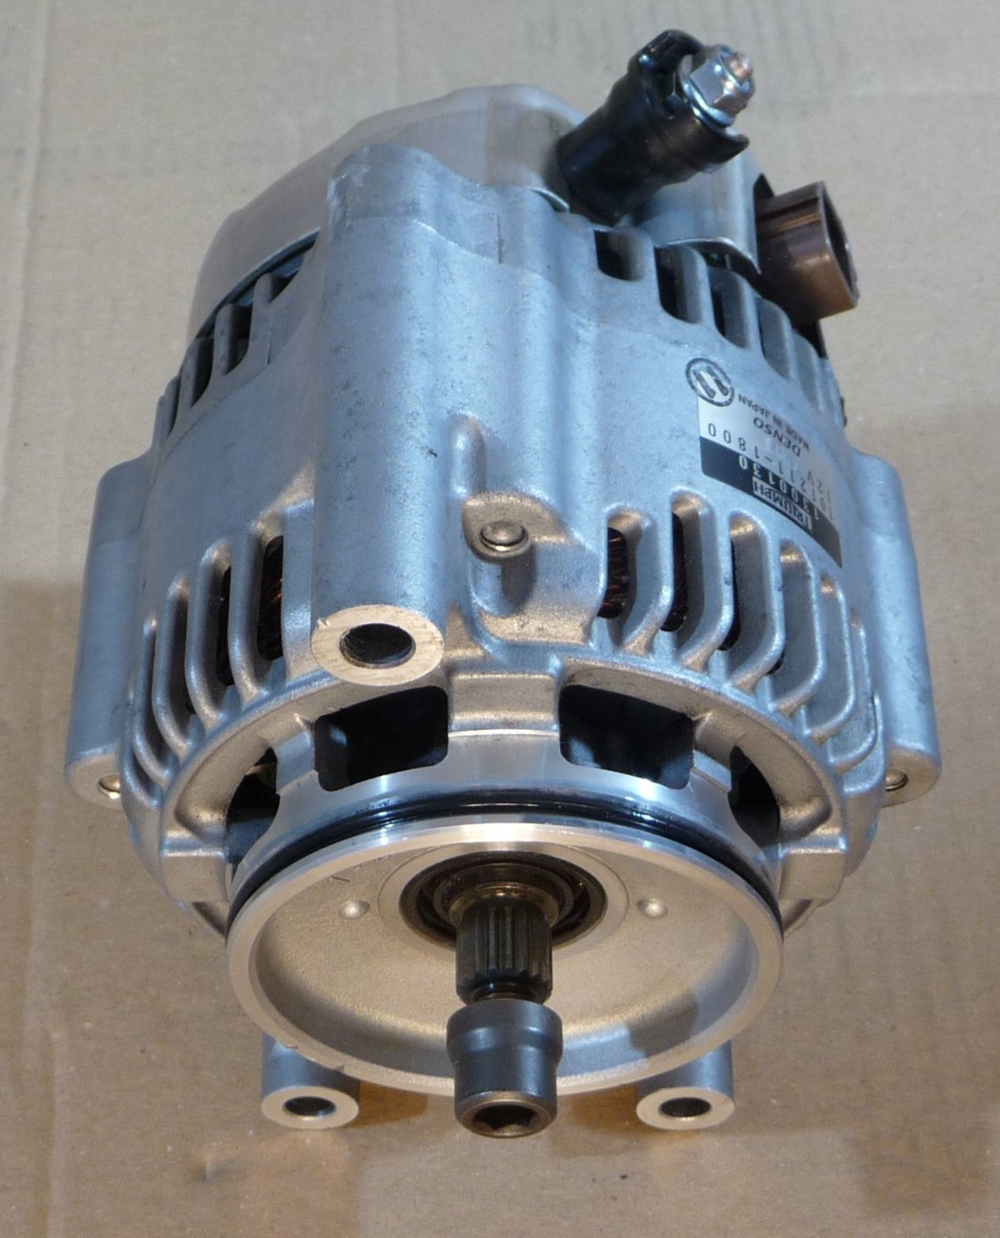 Lichtmaschine TRIUMPH 1300130, DENSO 101211-1800 Alternator Motor, Generator, Defekt!